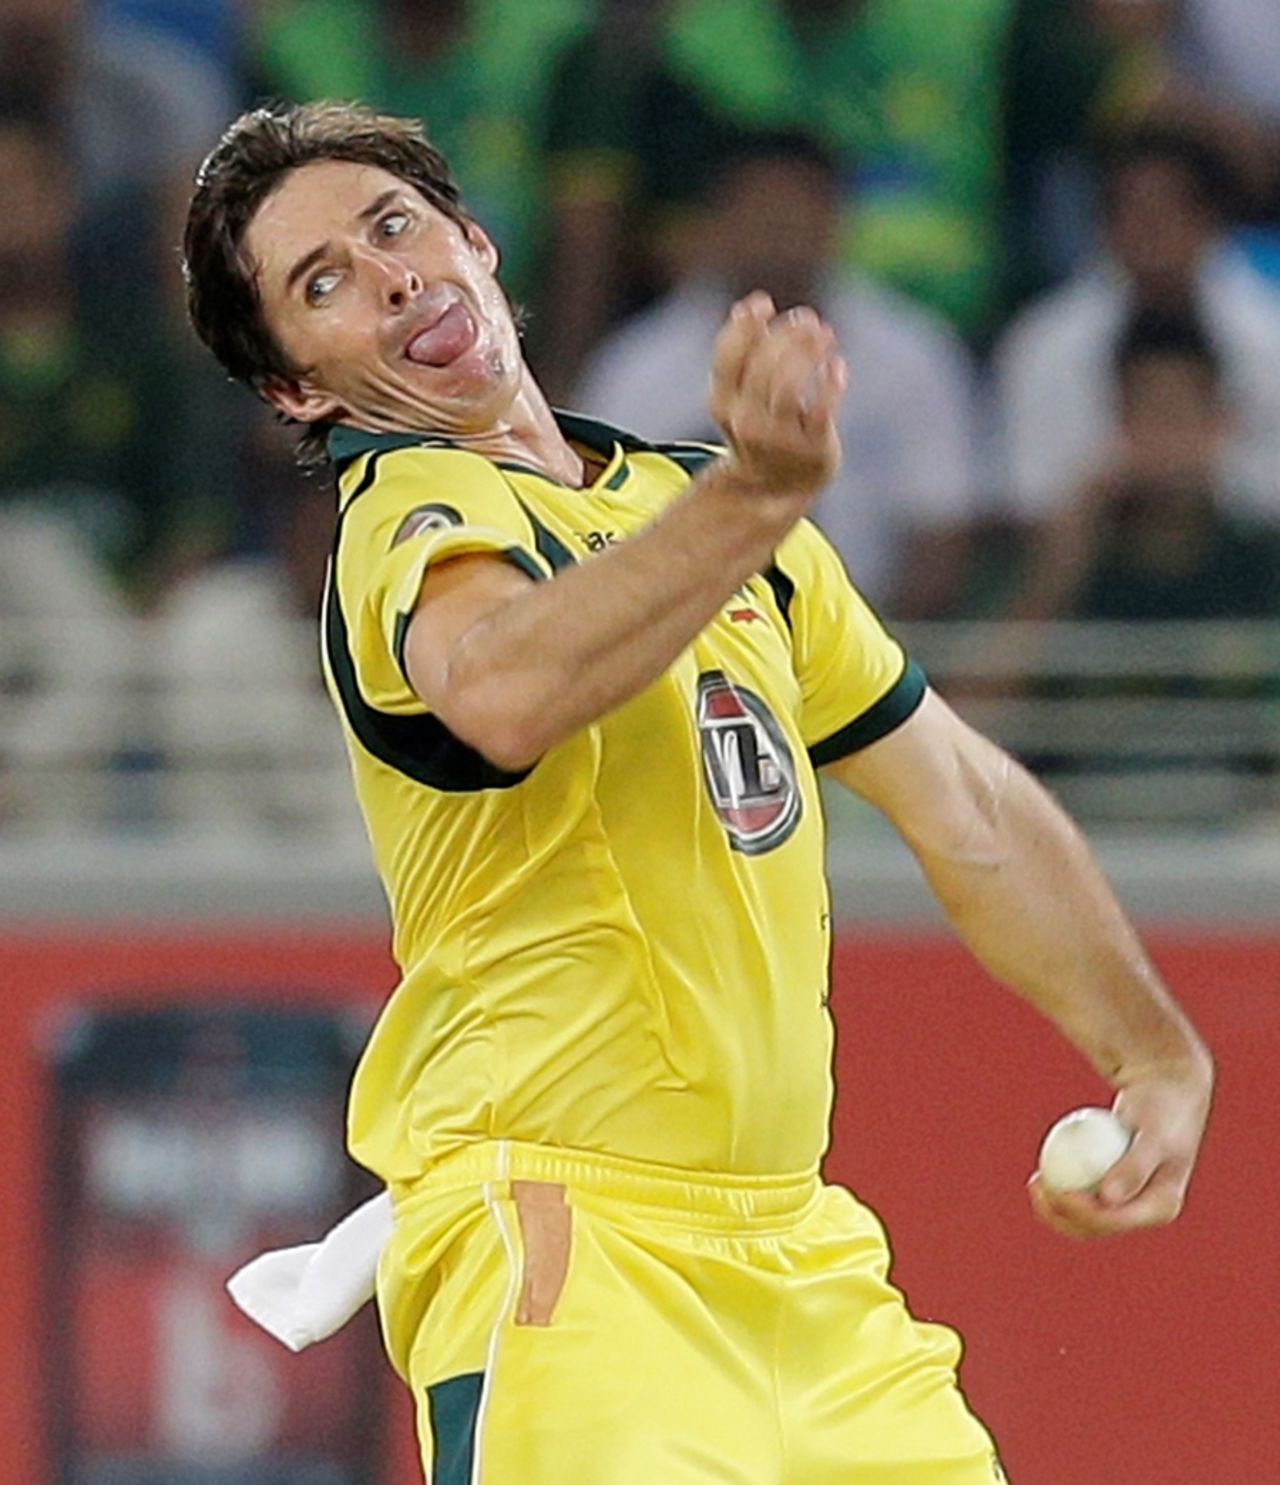 Brad Hogg runs in to bowl, Pakistan v Australia, 2nd T20I, Dubai, September 7, 2012